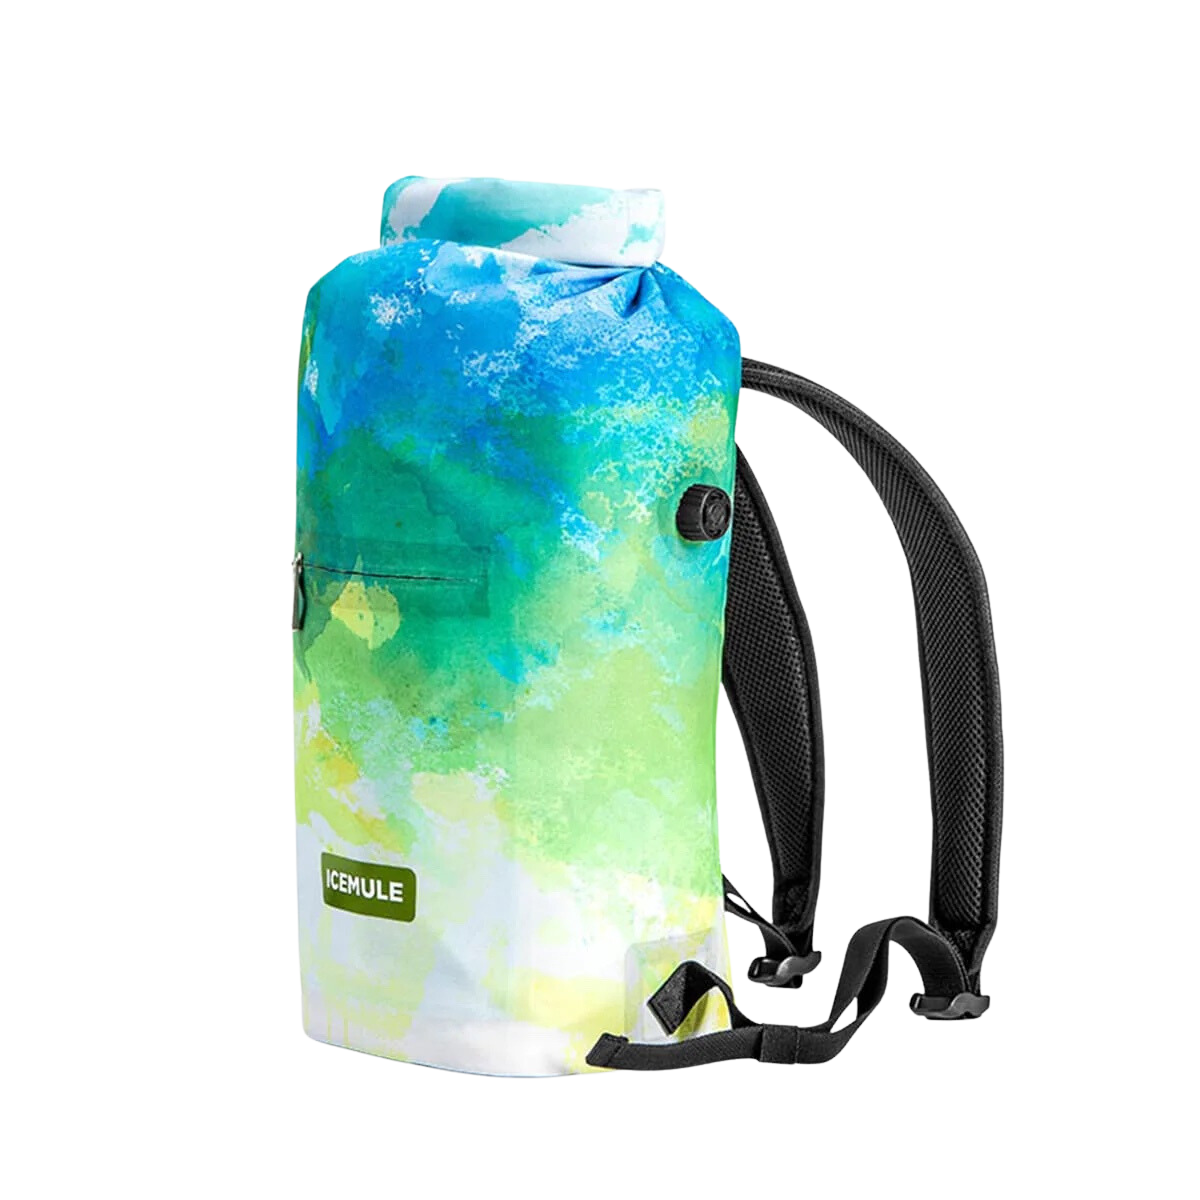 Icemule backpack cooler